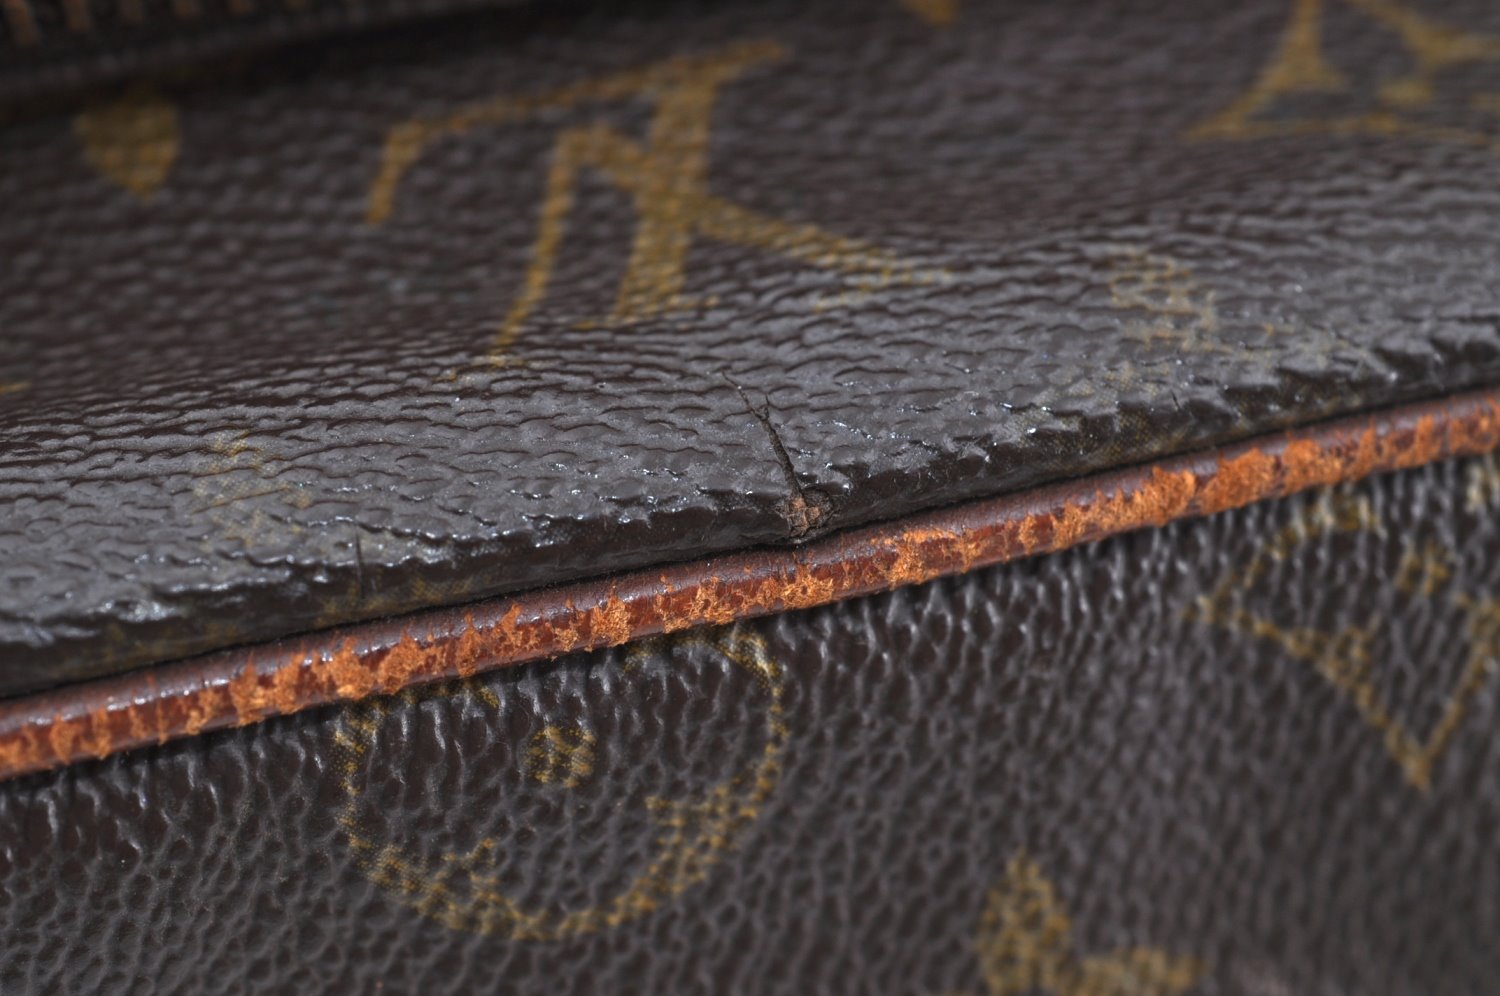 Authentic Louis Vuitton Monogram Nile Shoulder Cross Body Bag Old Model LV K7035